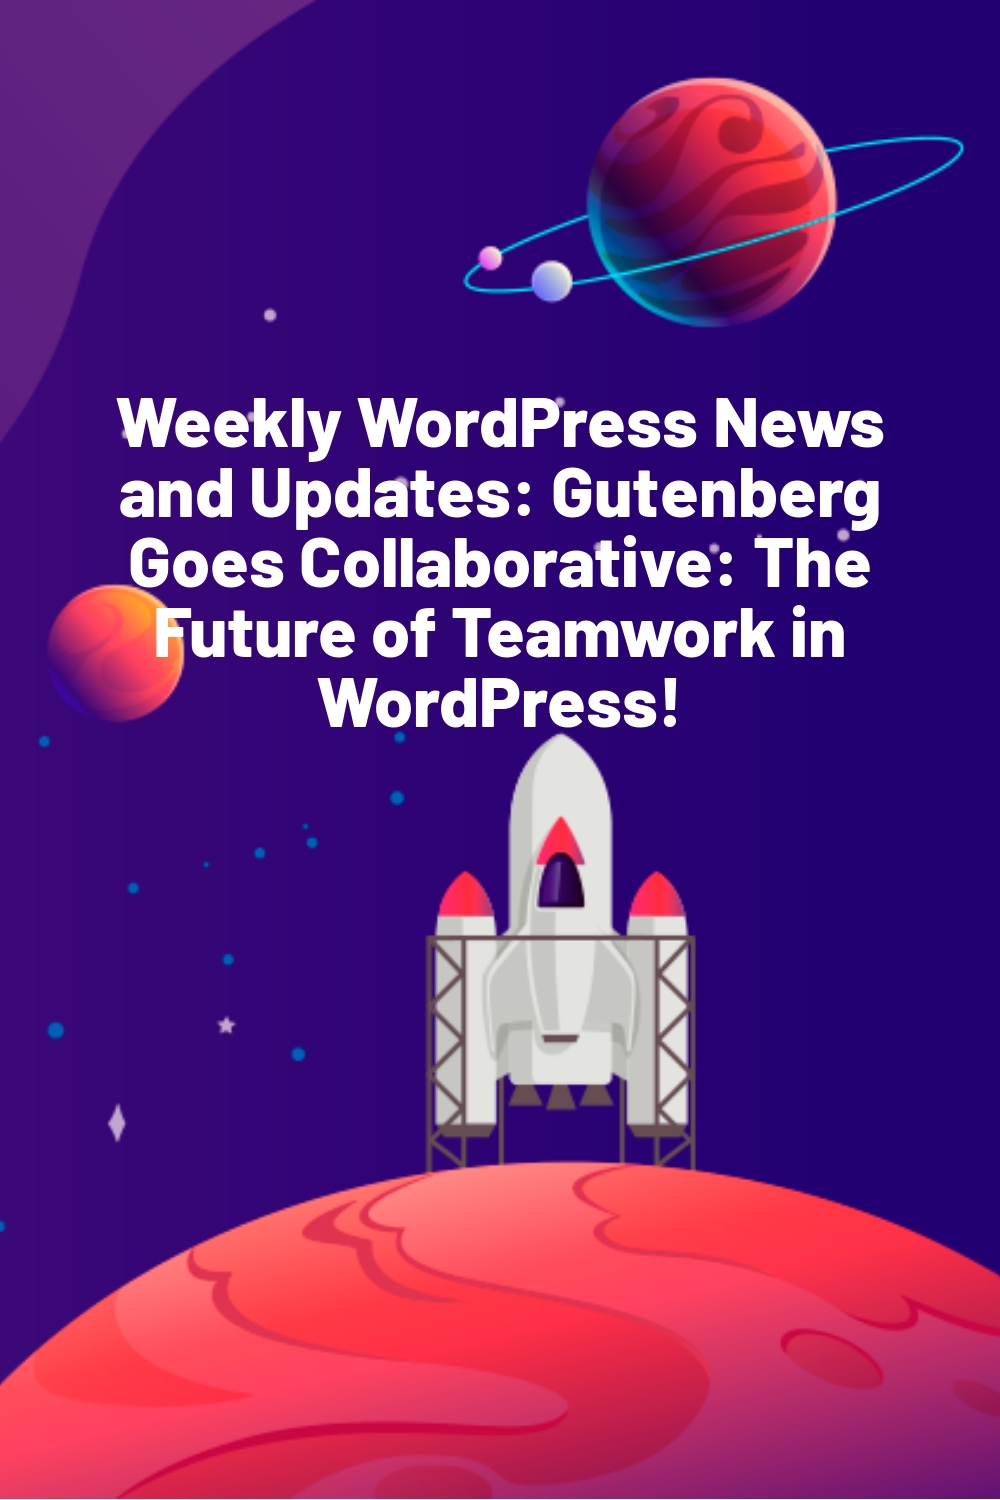 Weekly WordPress News and Updates: Gutenberg Goes Collaborative: The Future of Teamwork in WordPress!